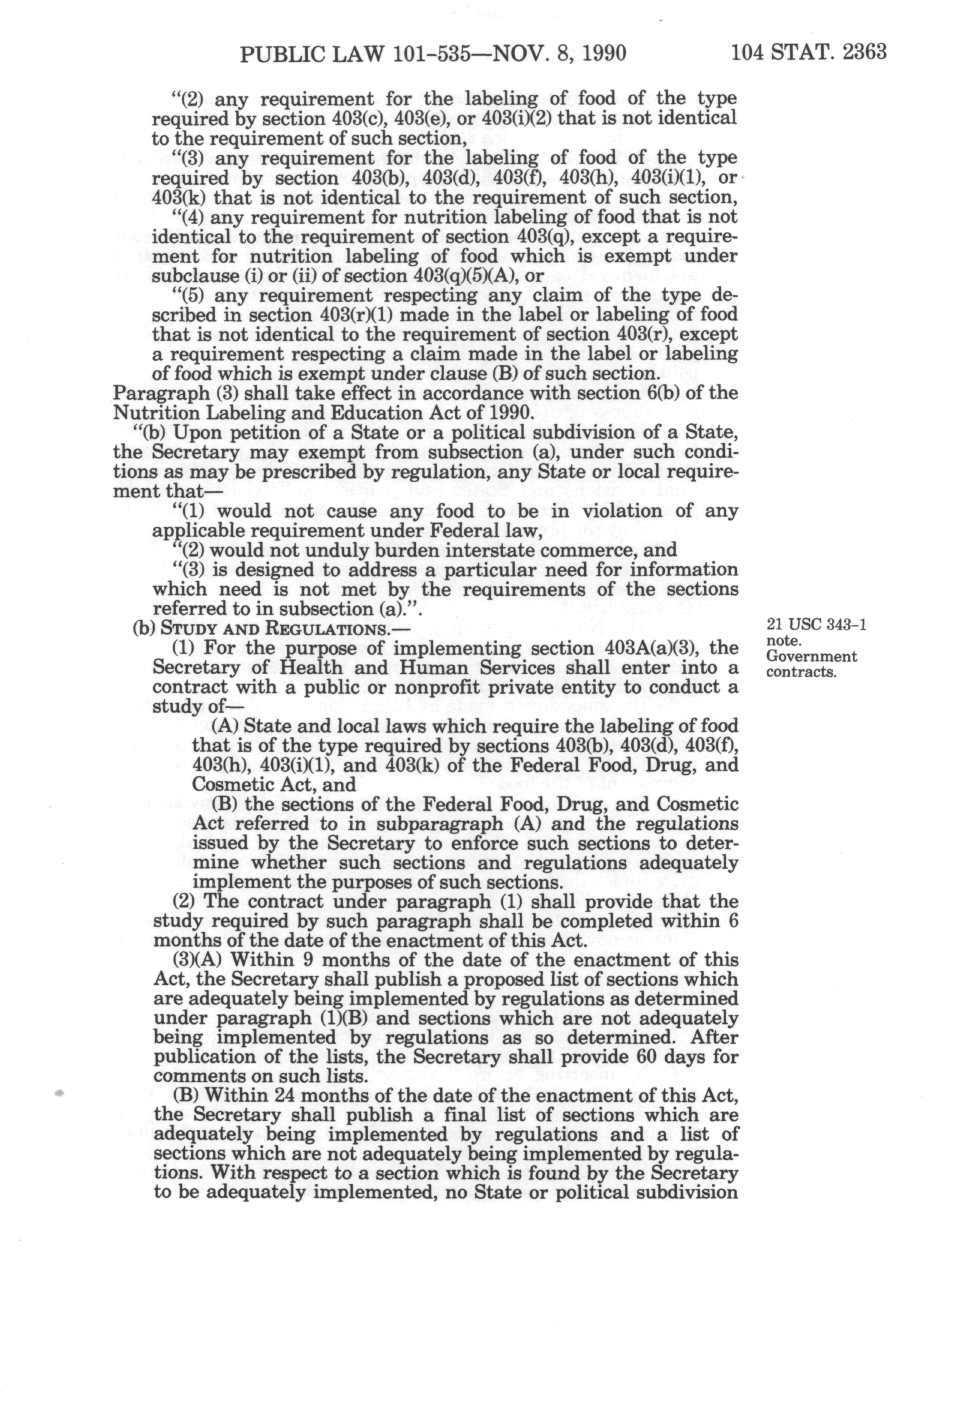 PUBLIC LAW 101-535 NOV. 8, 1990 104 STAT.